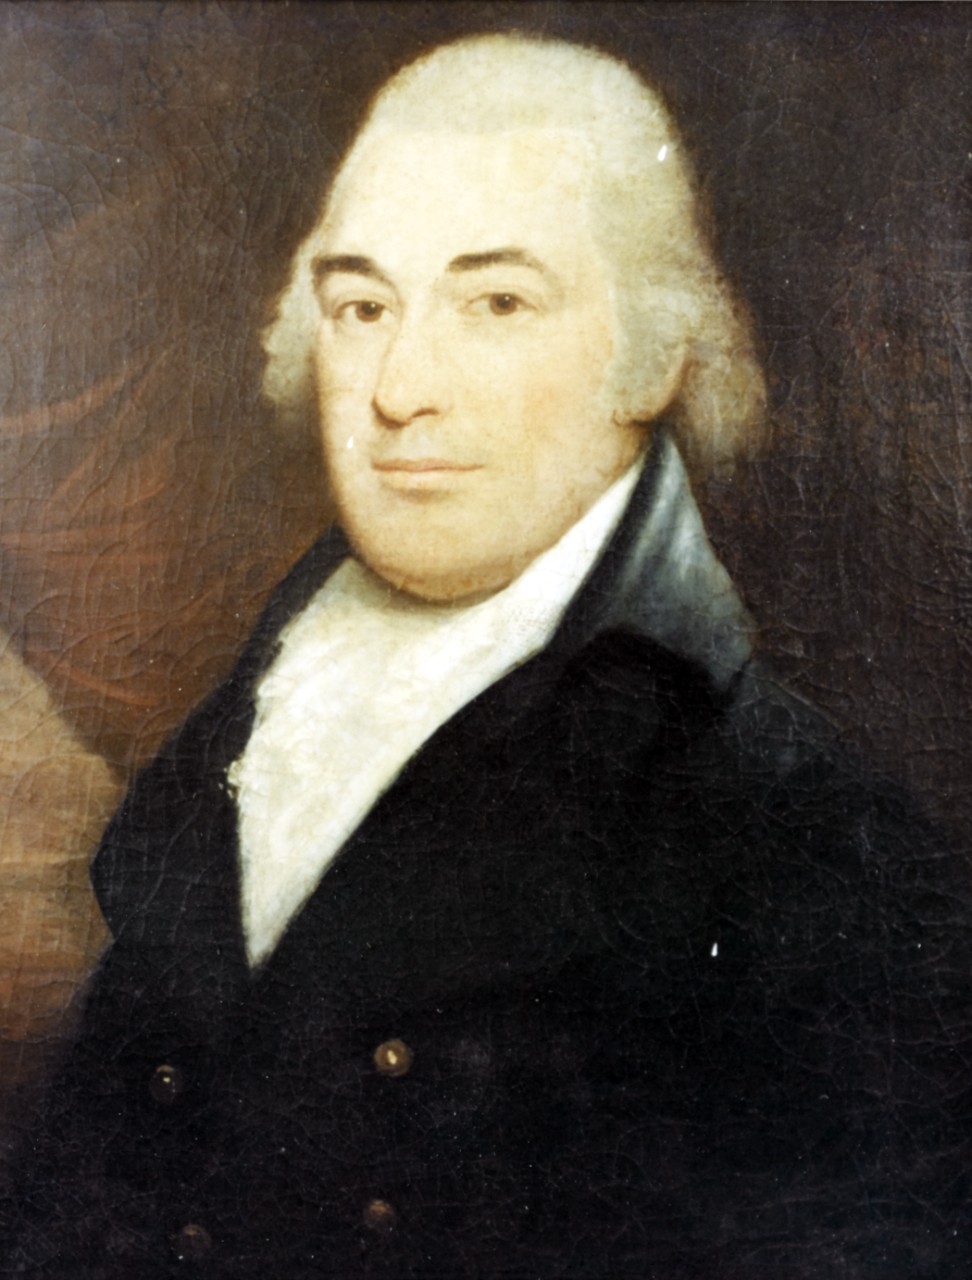 Photo #: NH 54764-KN William Jones, Secretary of the Navy, 19 January 1813 - 1 December 1814 